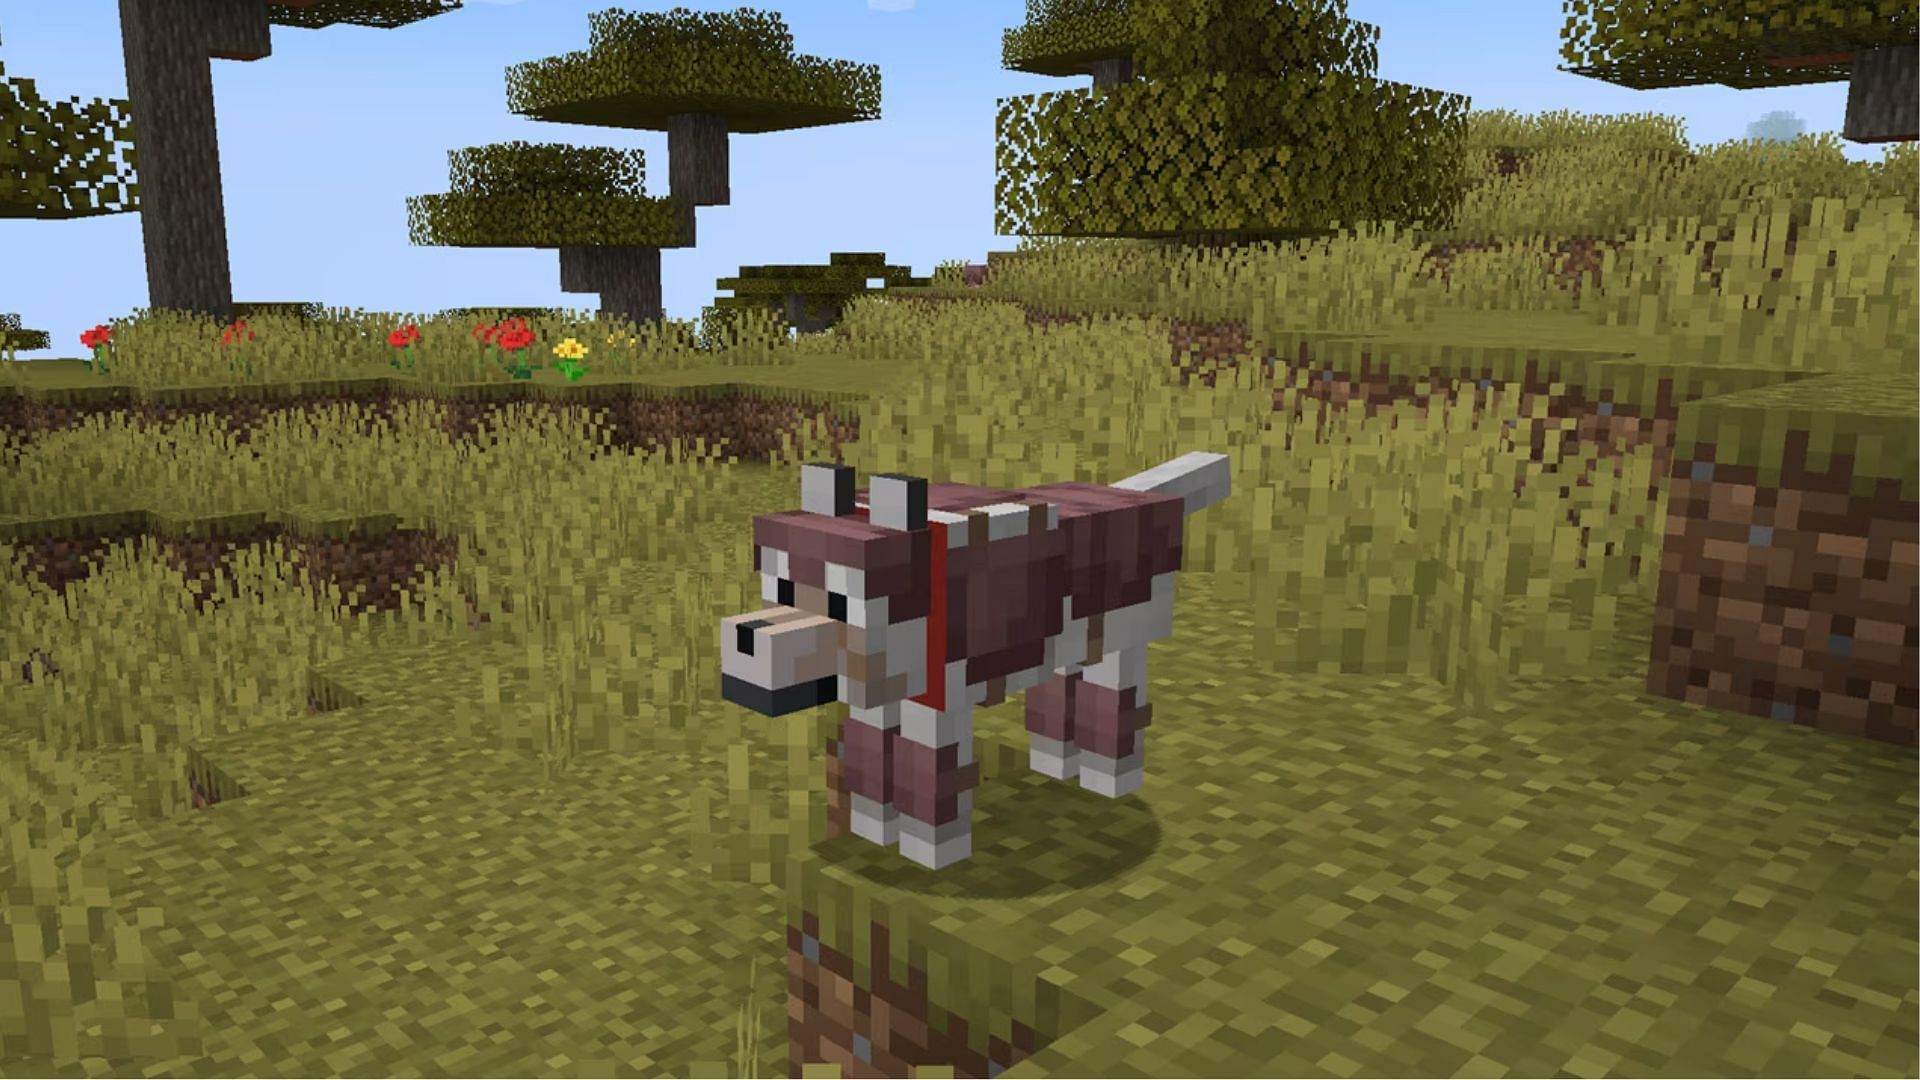 The wolf armor in Minecraft (Image via Mojang Studios)